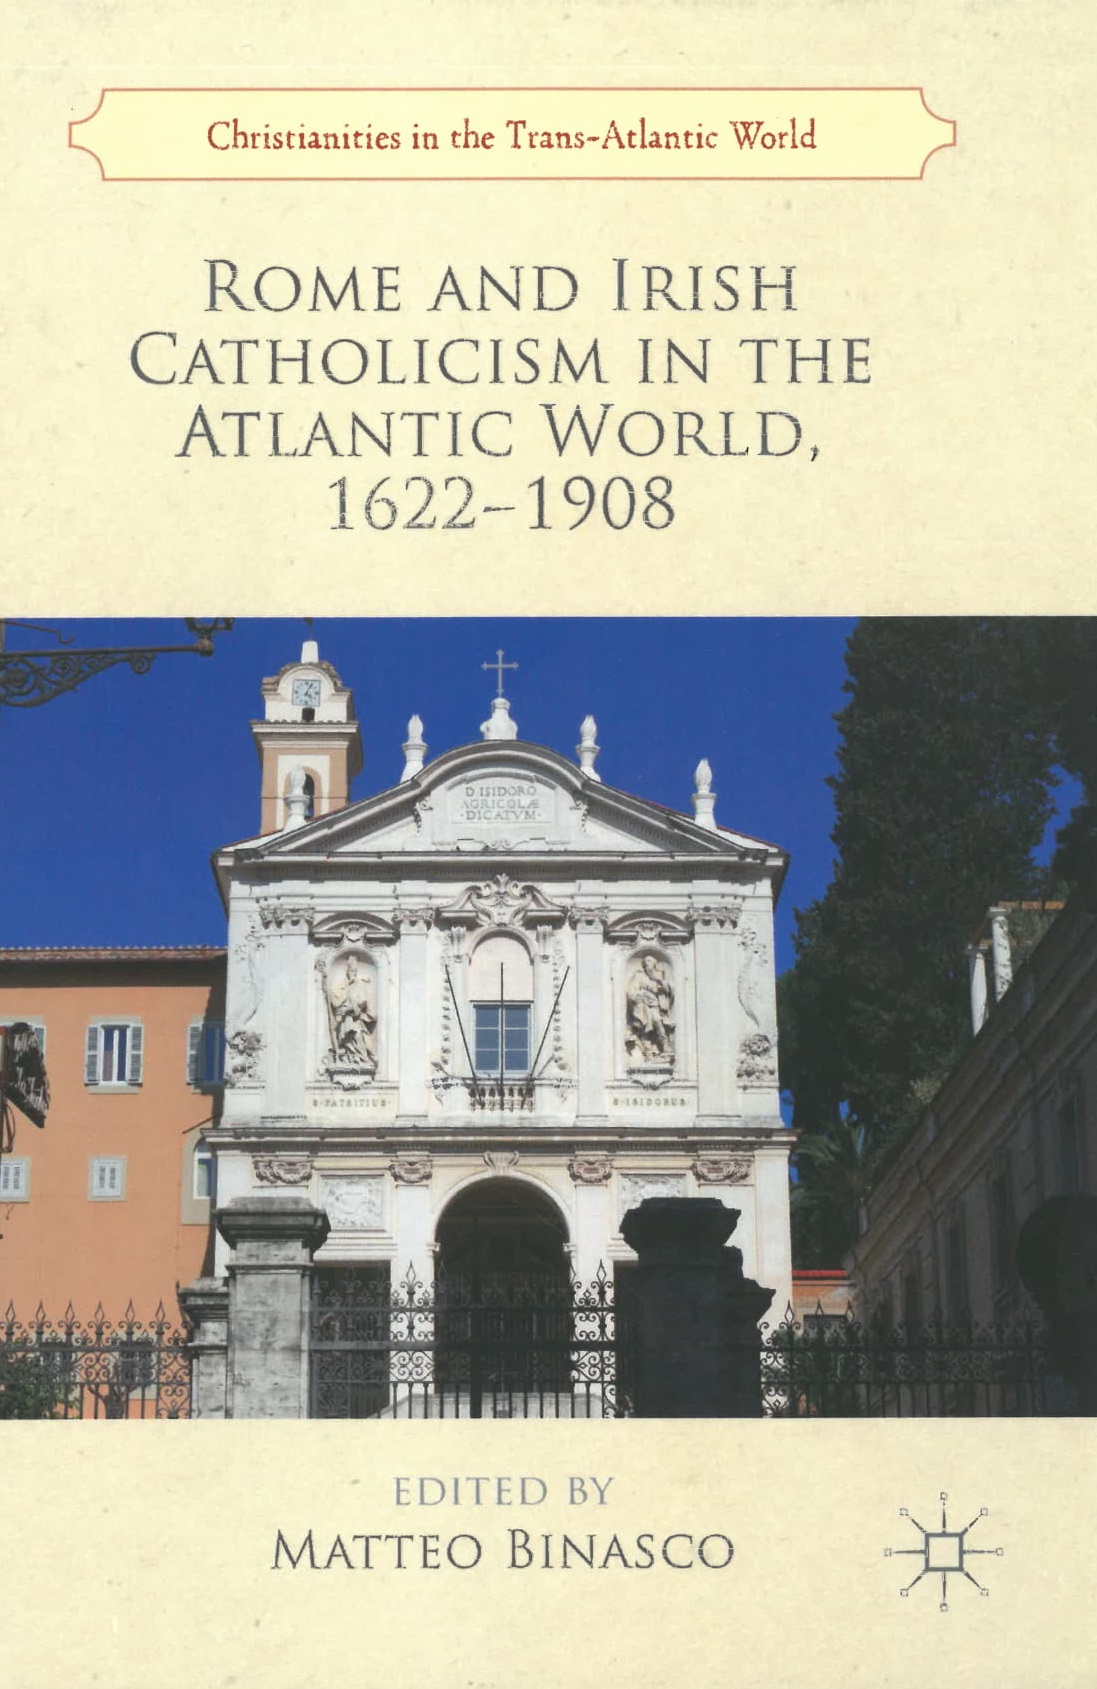 Book entitle Rome and Irish Catholicism in the Atlatnic World 1622-1908